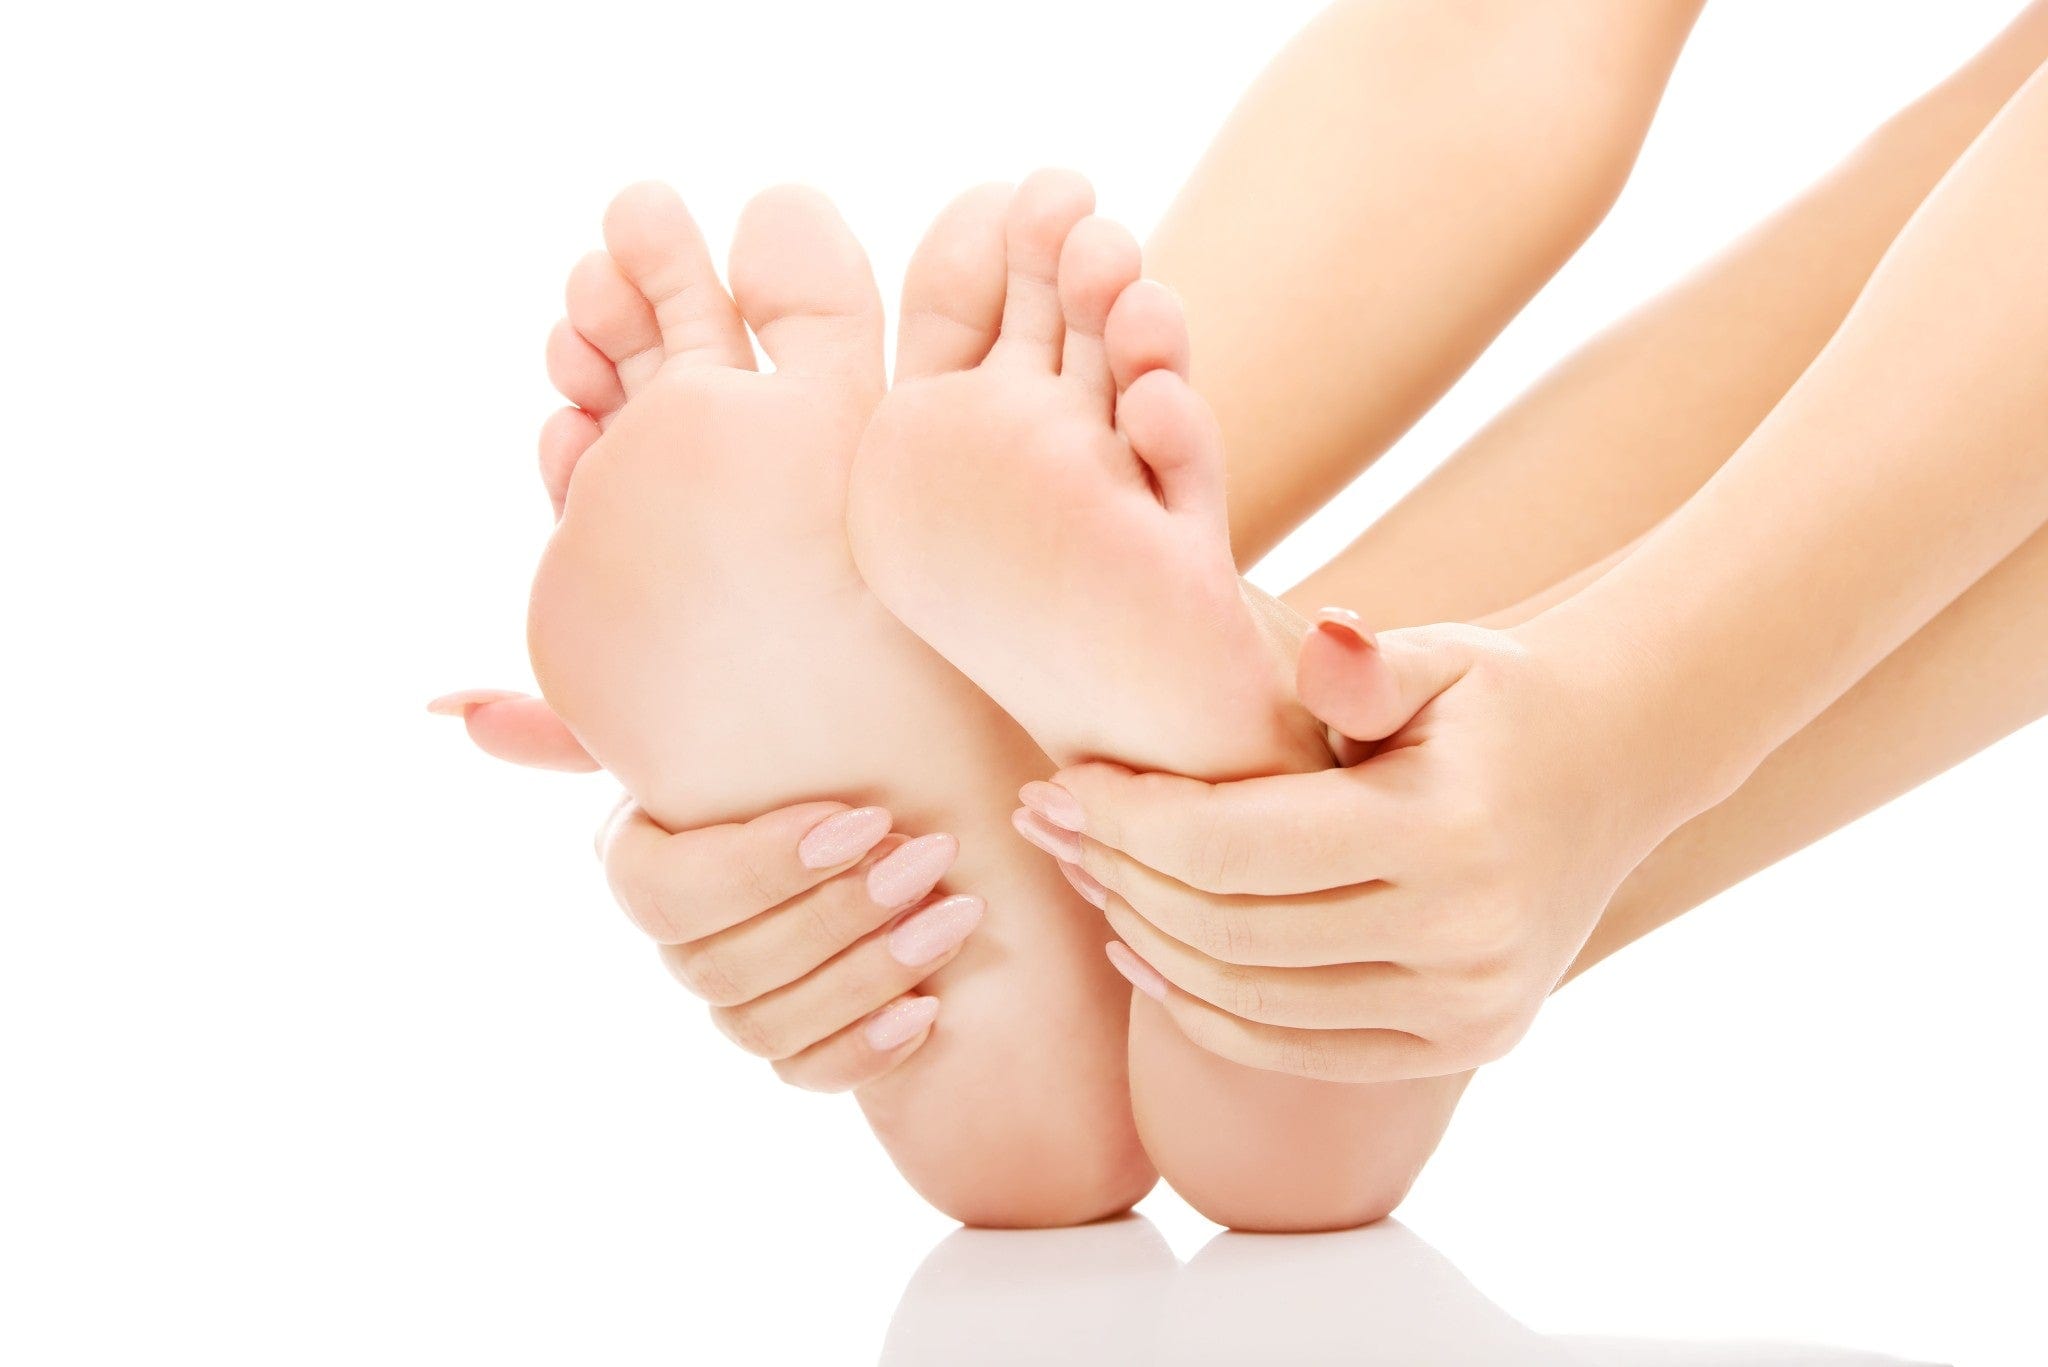 Foot HQ Foot Care UreSpray 35% 125m Urea Spray Moisturiser for Dry and Cracked Callus Feet Heels